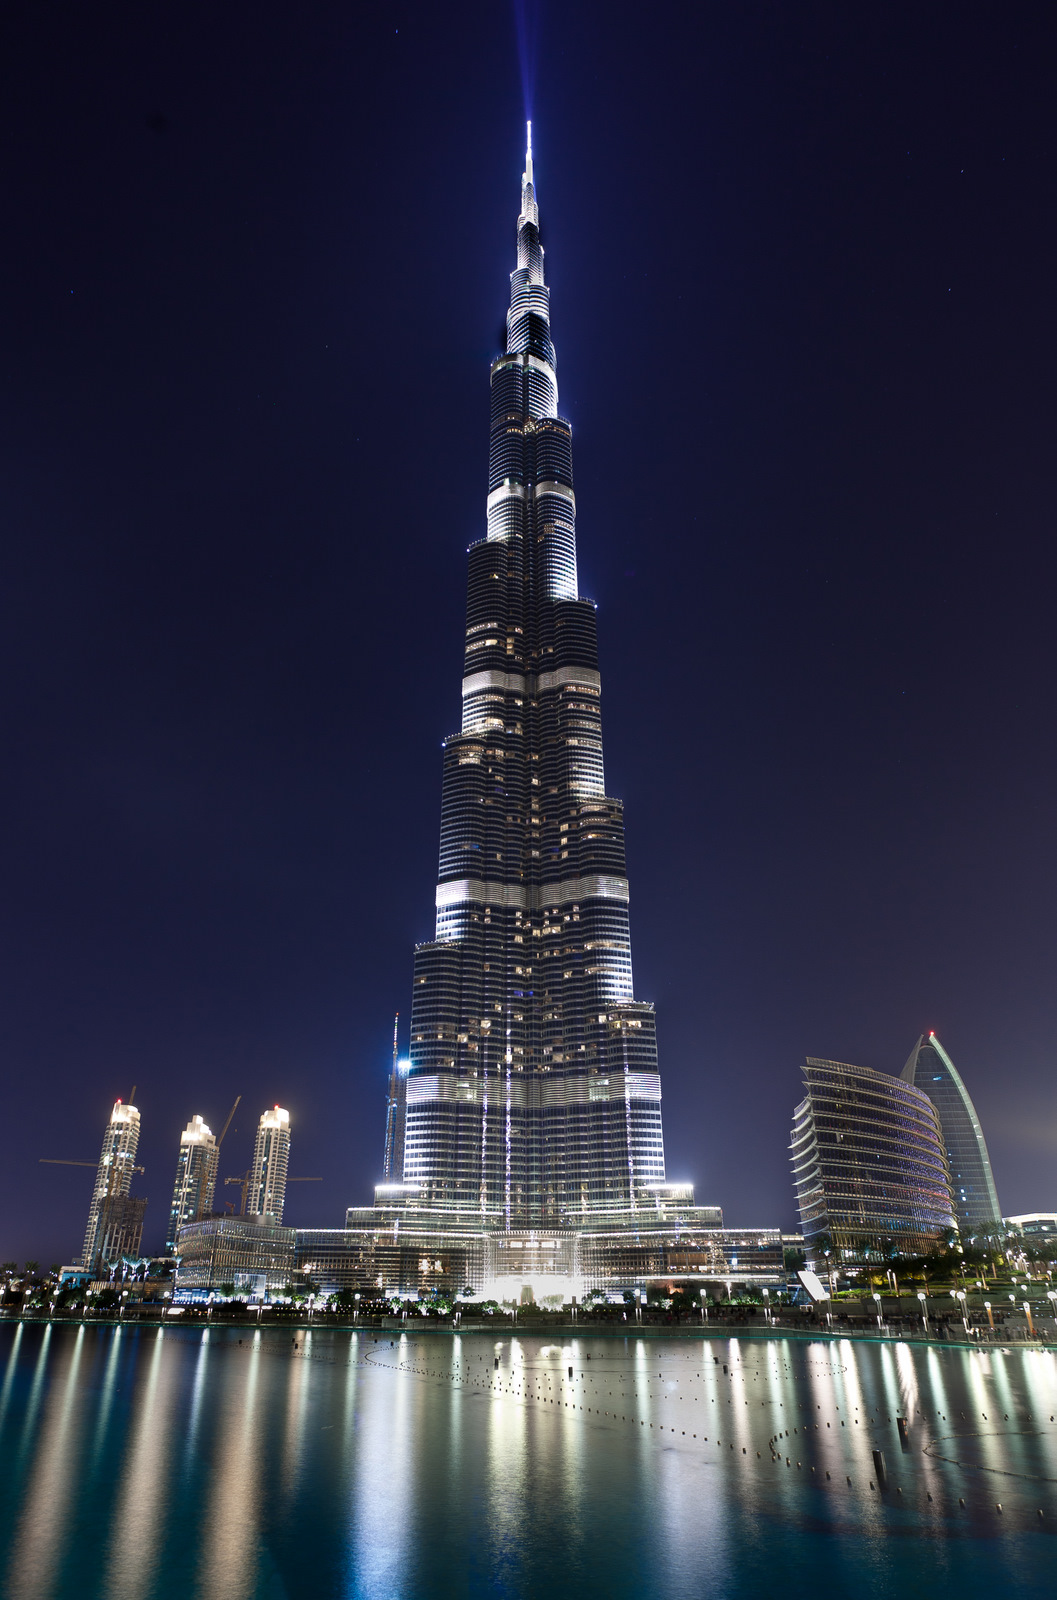 Burj Khalifa - Megaconstrucciones, Extreme Engineering